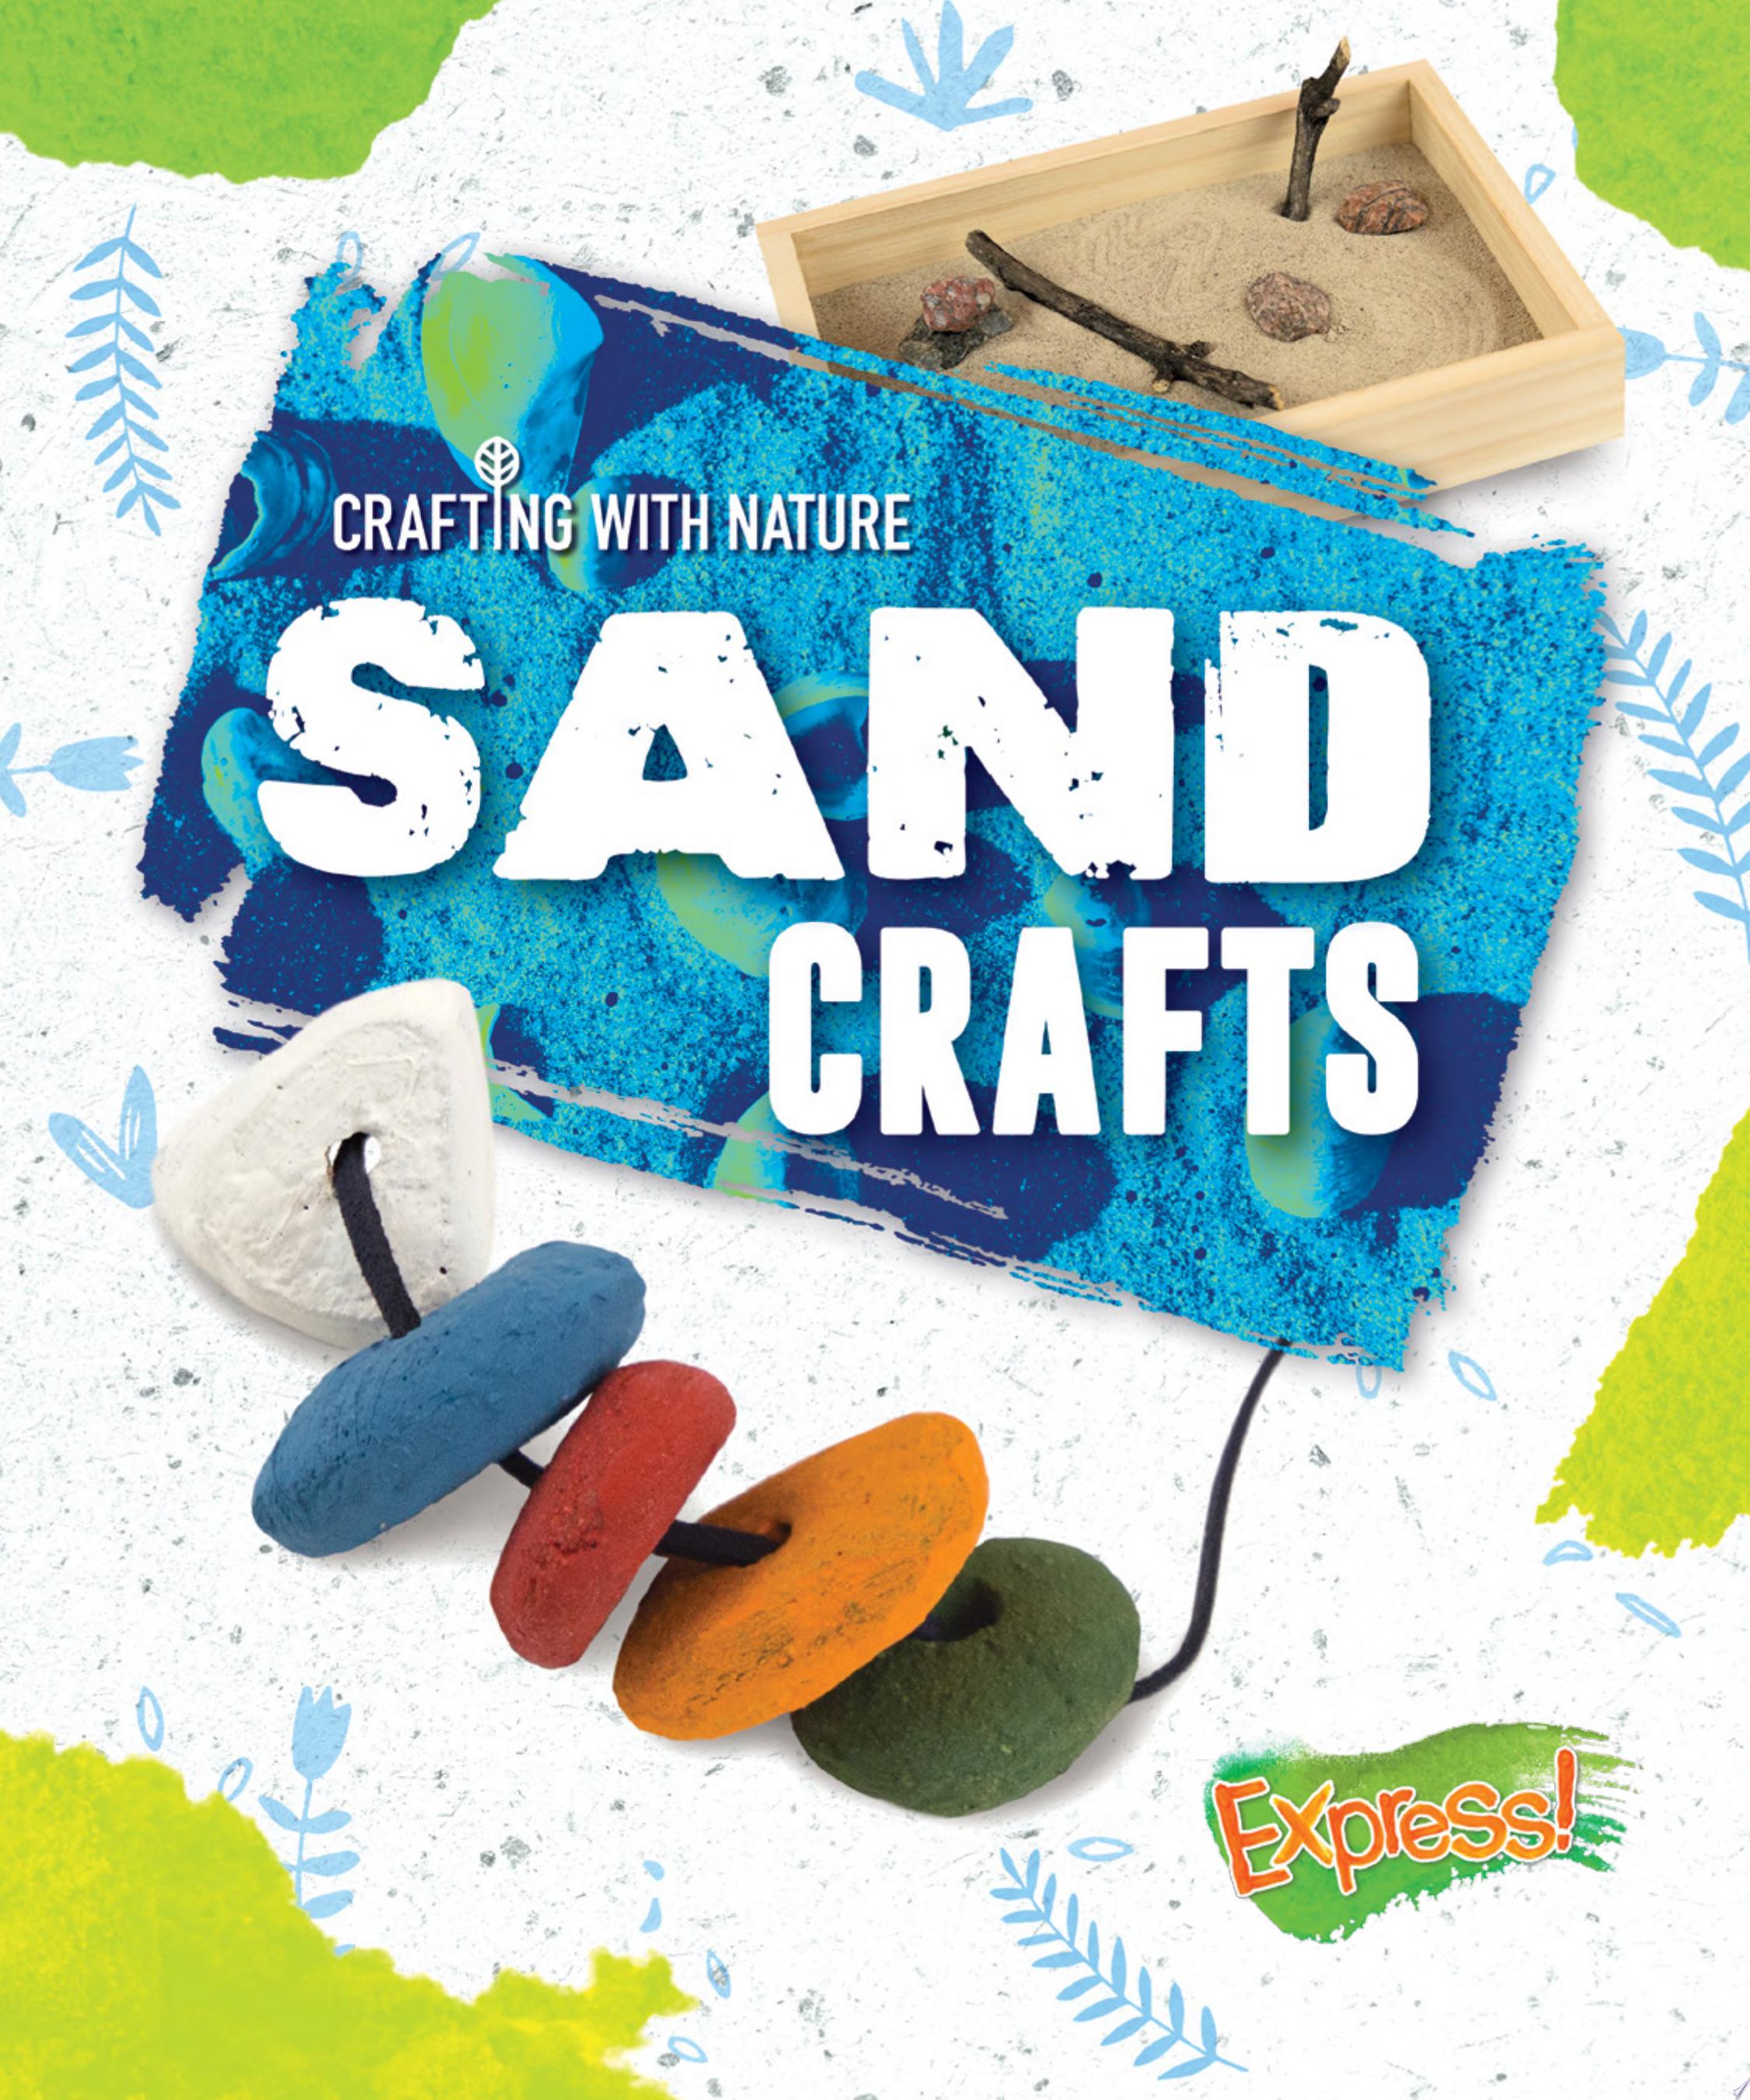 Image for "Sand Crafts"